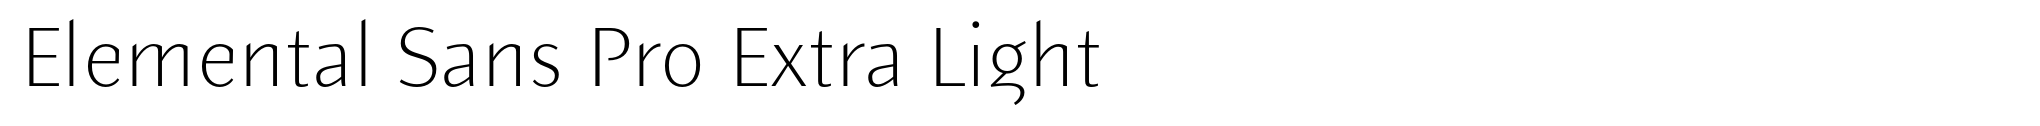 Elemental Sans Pro Extra Light image